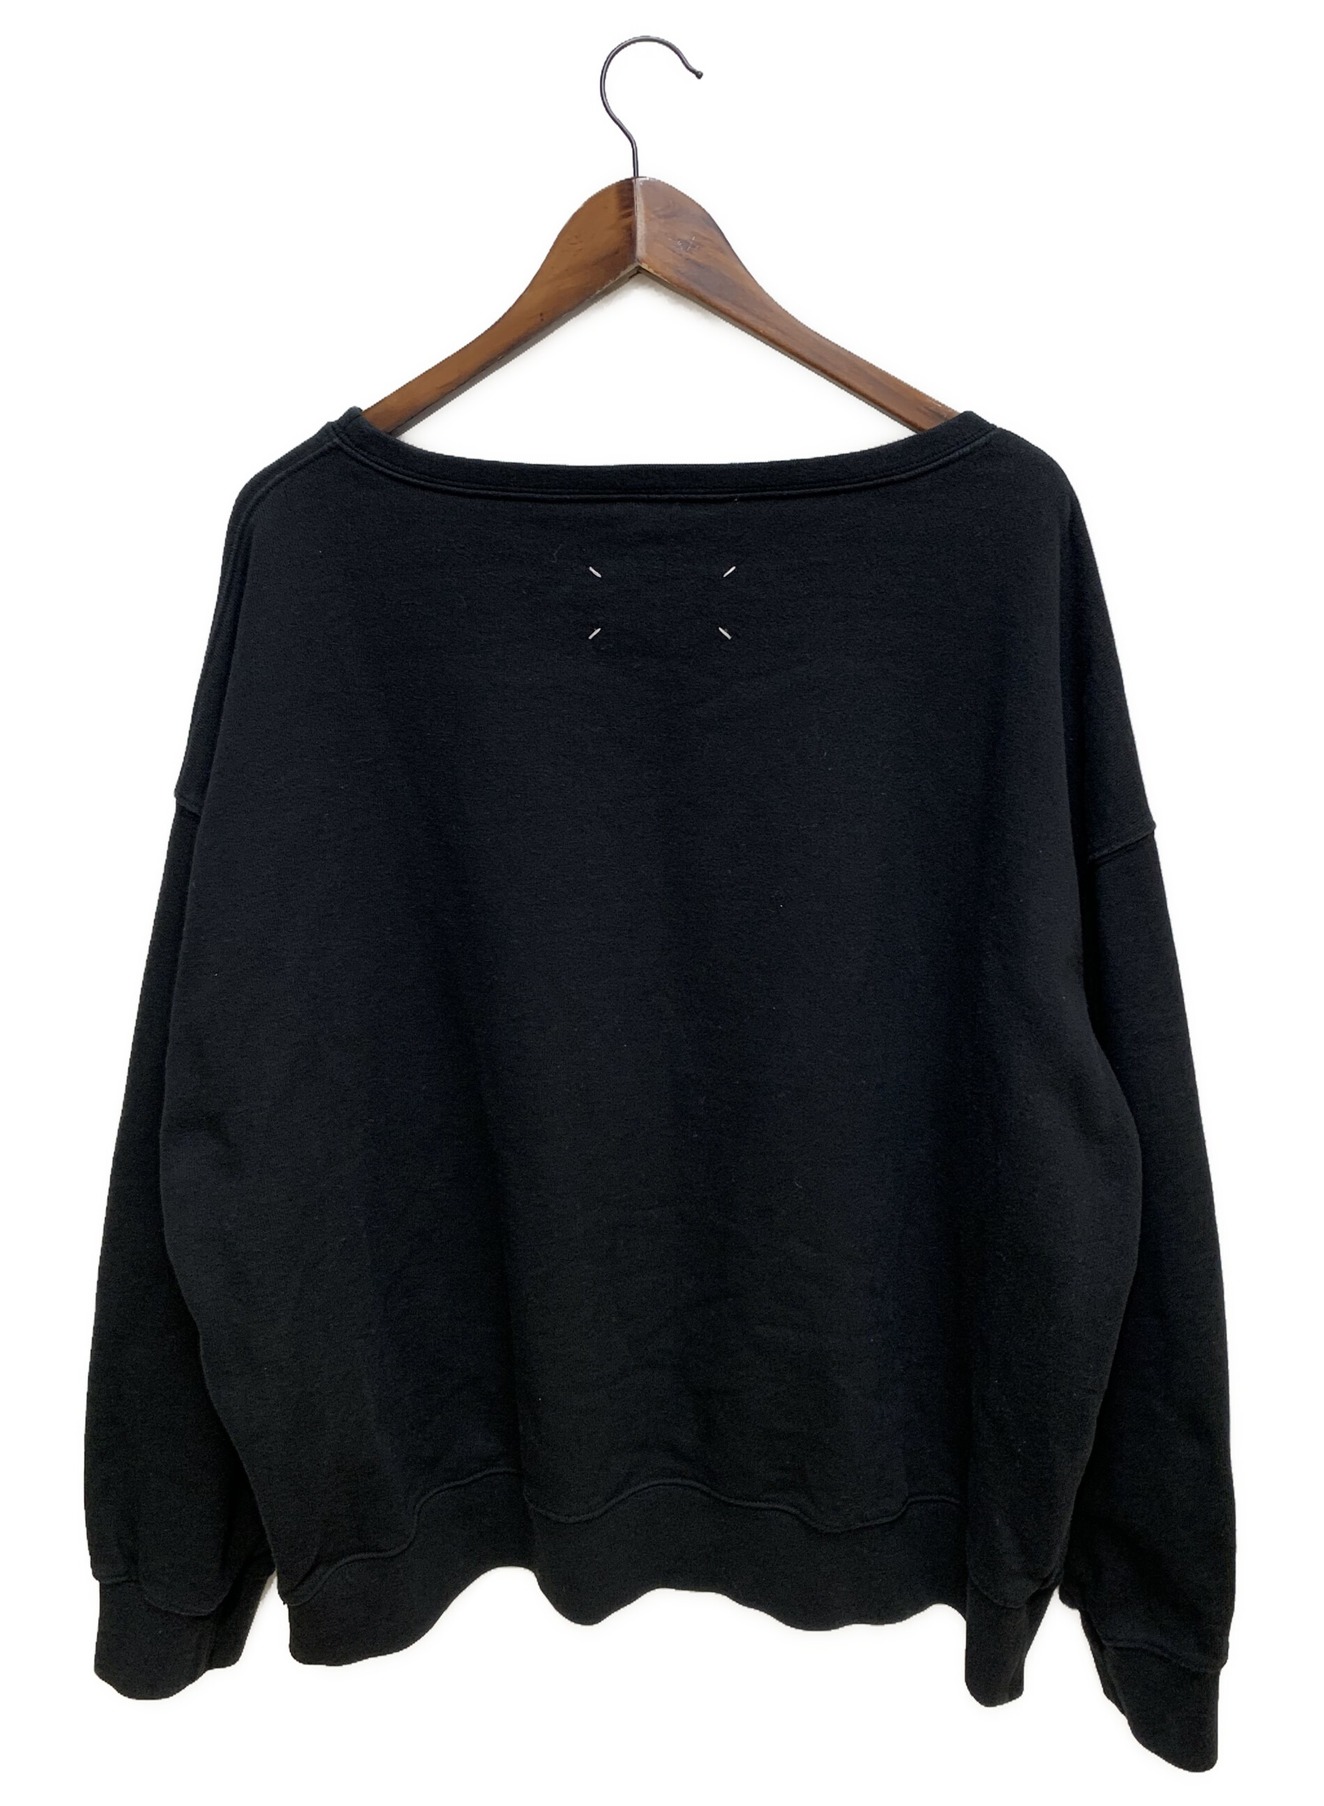 Maison Margiela (メゾンマルジェラ) オーバーサイズスウェットシャツ ブラック サイズ:48